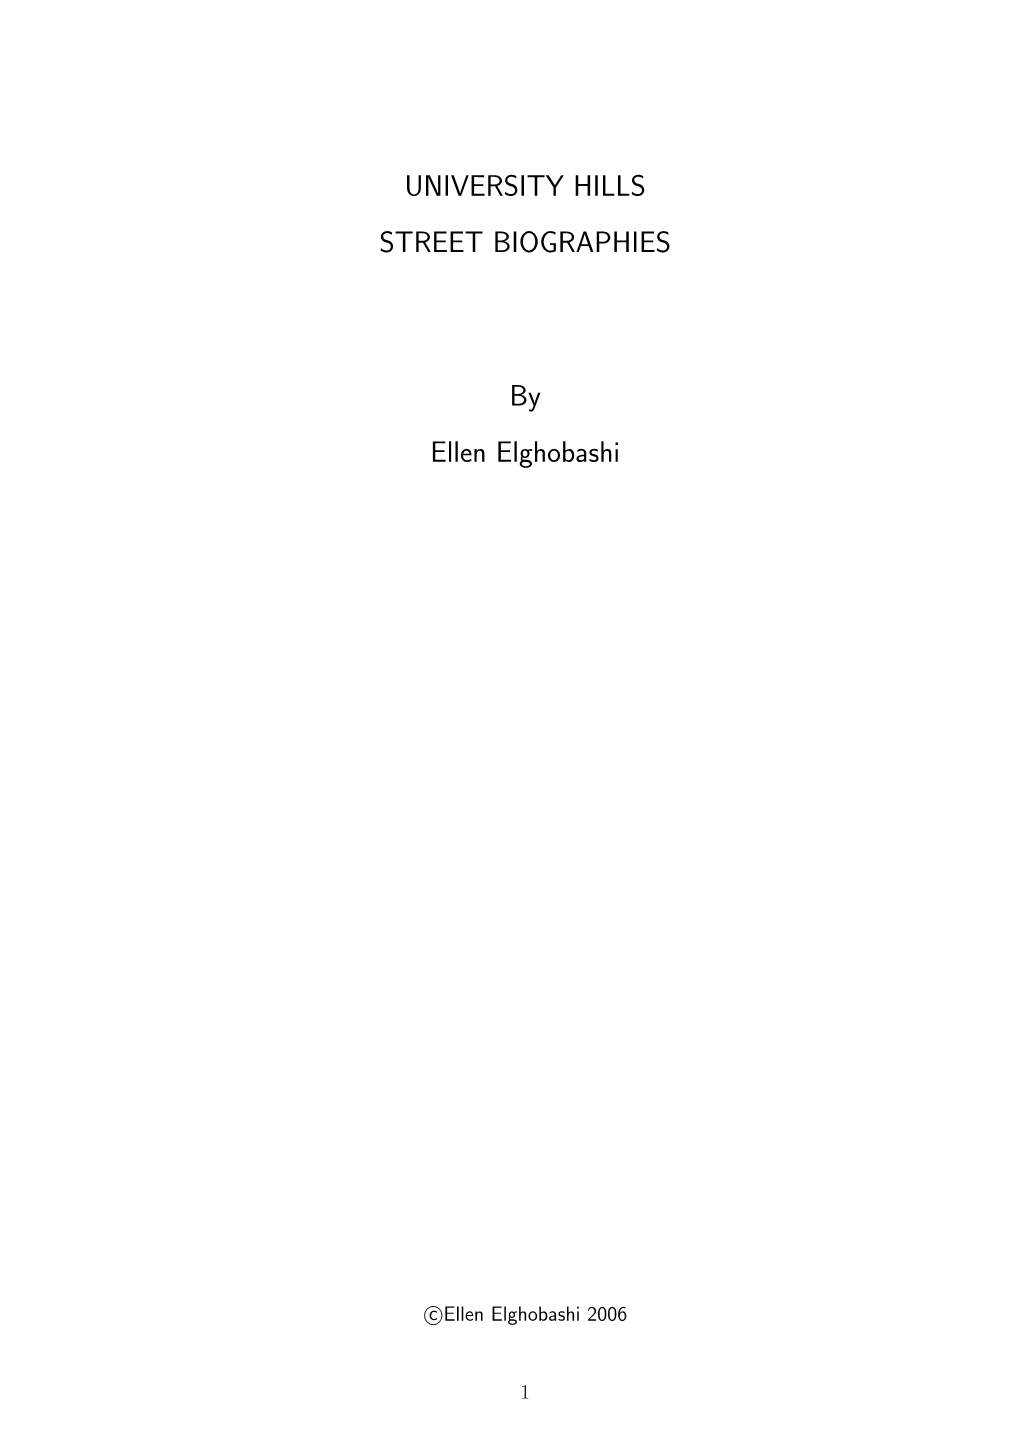 UNIVERSITY HILLS STREET BIOGRAPHIES by Ellen Elghobashi